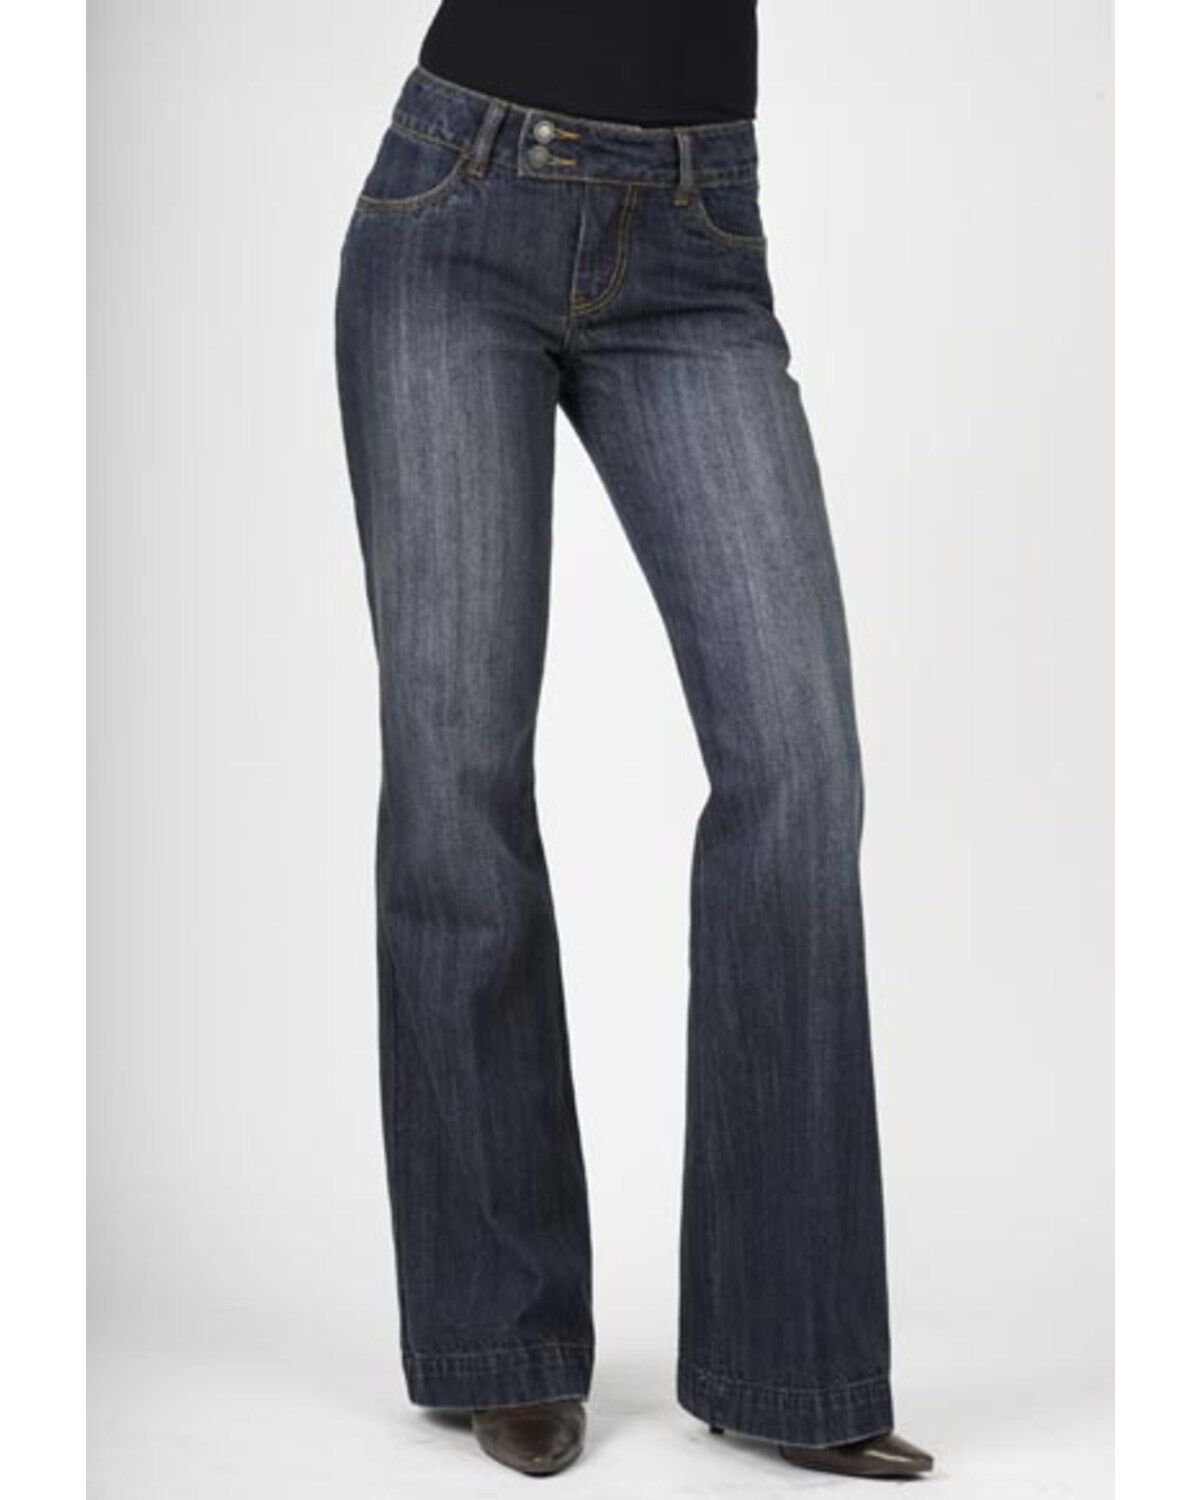 Women's Sale Jeans \u0026 Shorts - Boot Barn